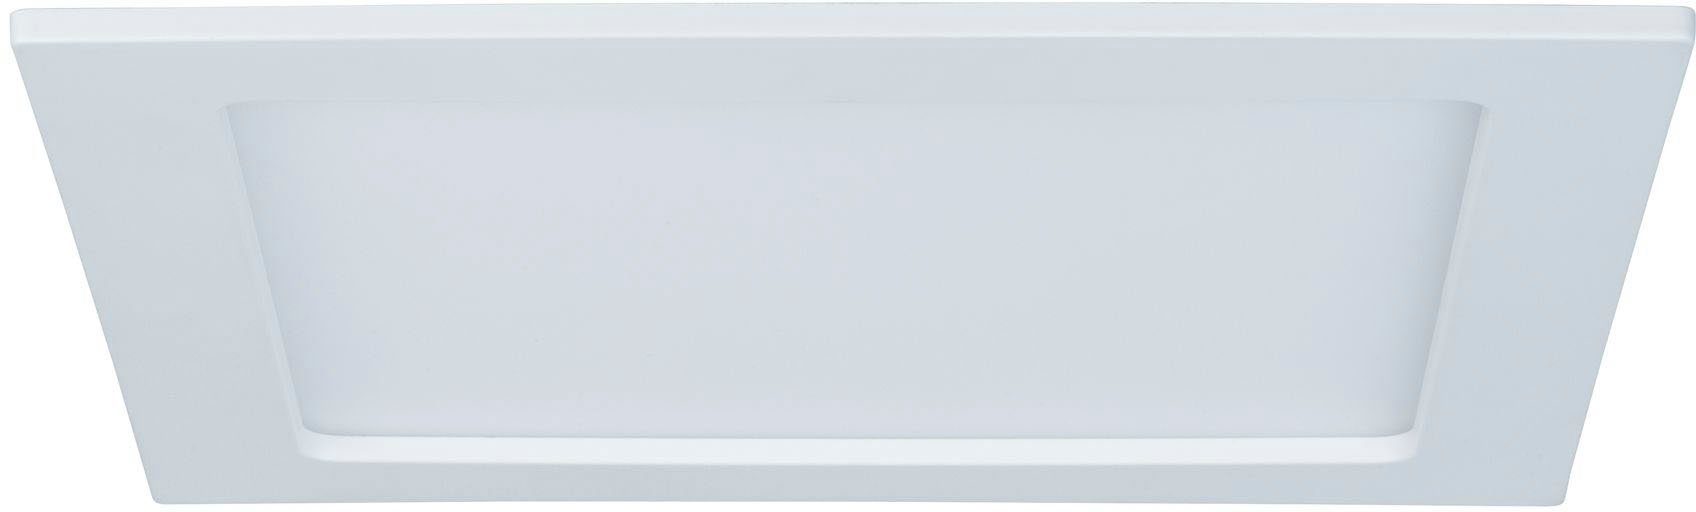 Paulmann LED Deckenleuchte, Badleuchte Neutralweiß, LED IP44 integriert, Panel Dimmbar Weiß 9W spritzwassergeschützt fest eckig